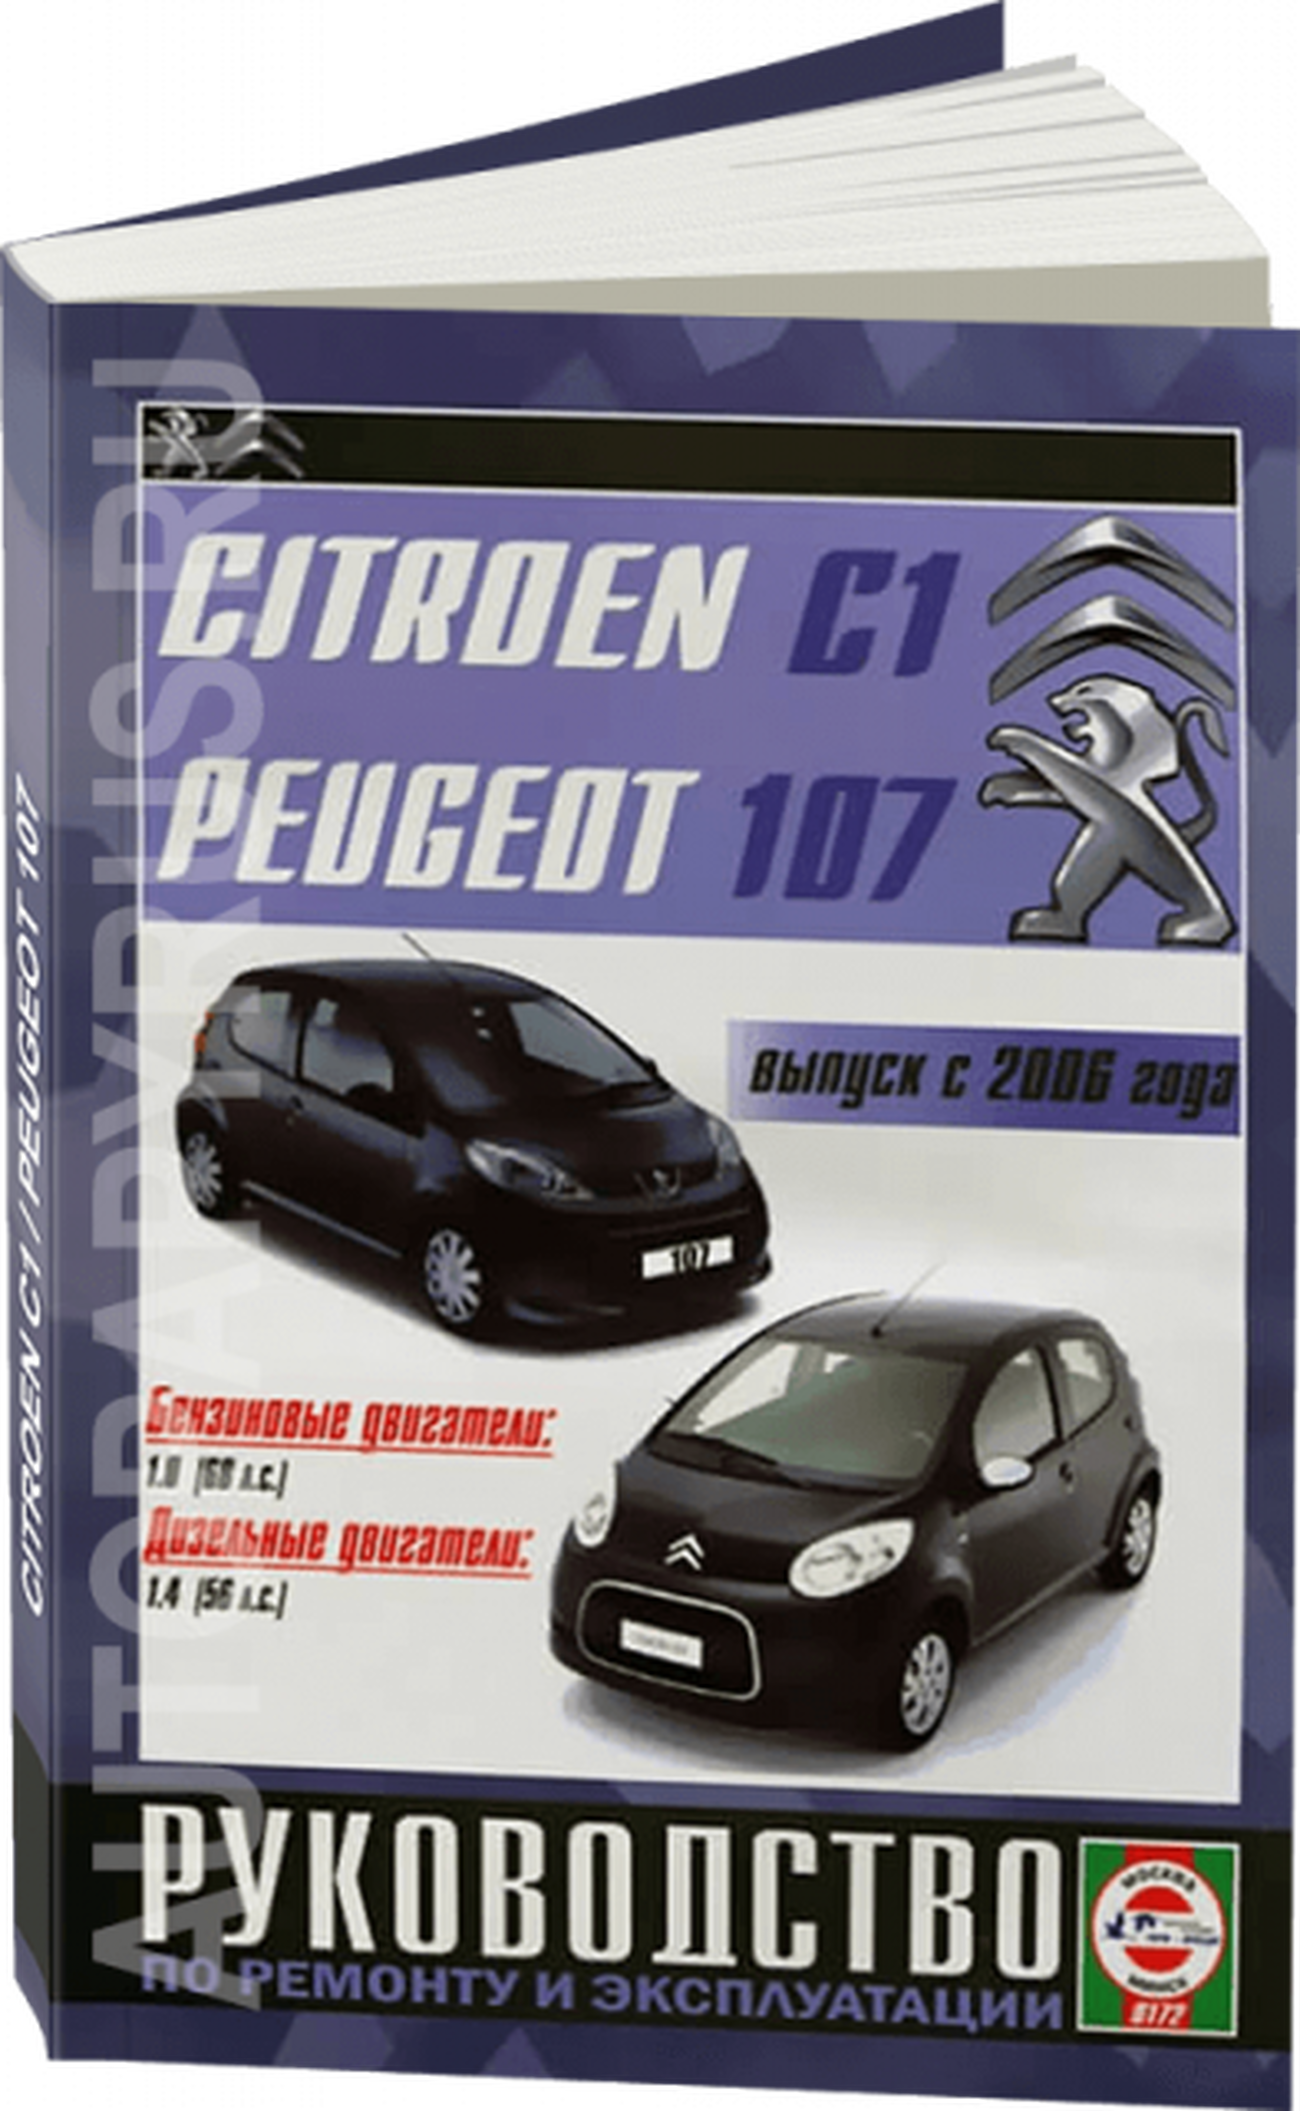 Книга: CITROEN C1 / PEUGEOT 107 (б , д) с 2006 г.в., рем., экспл., то | Чижовка